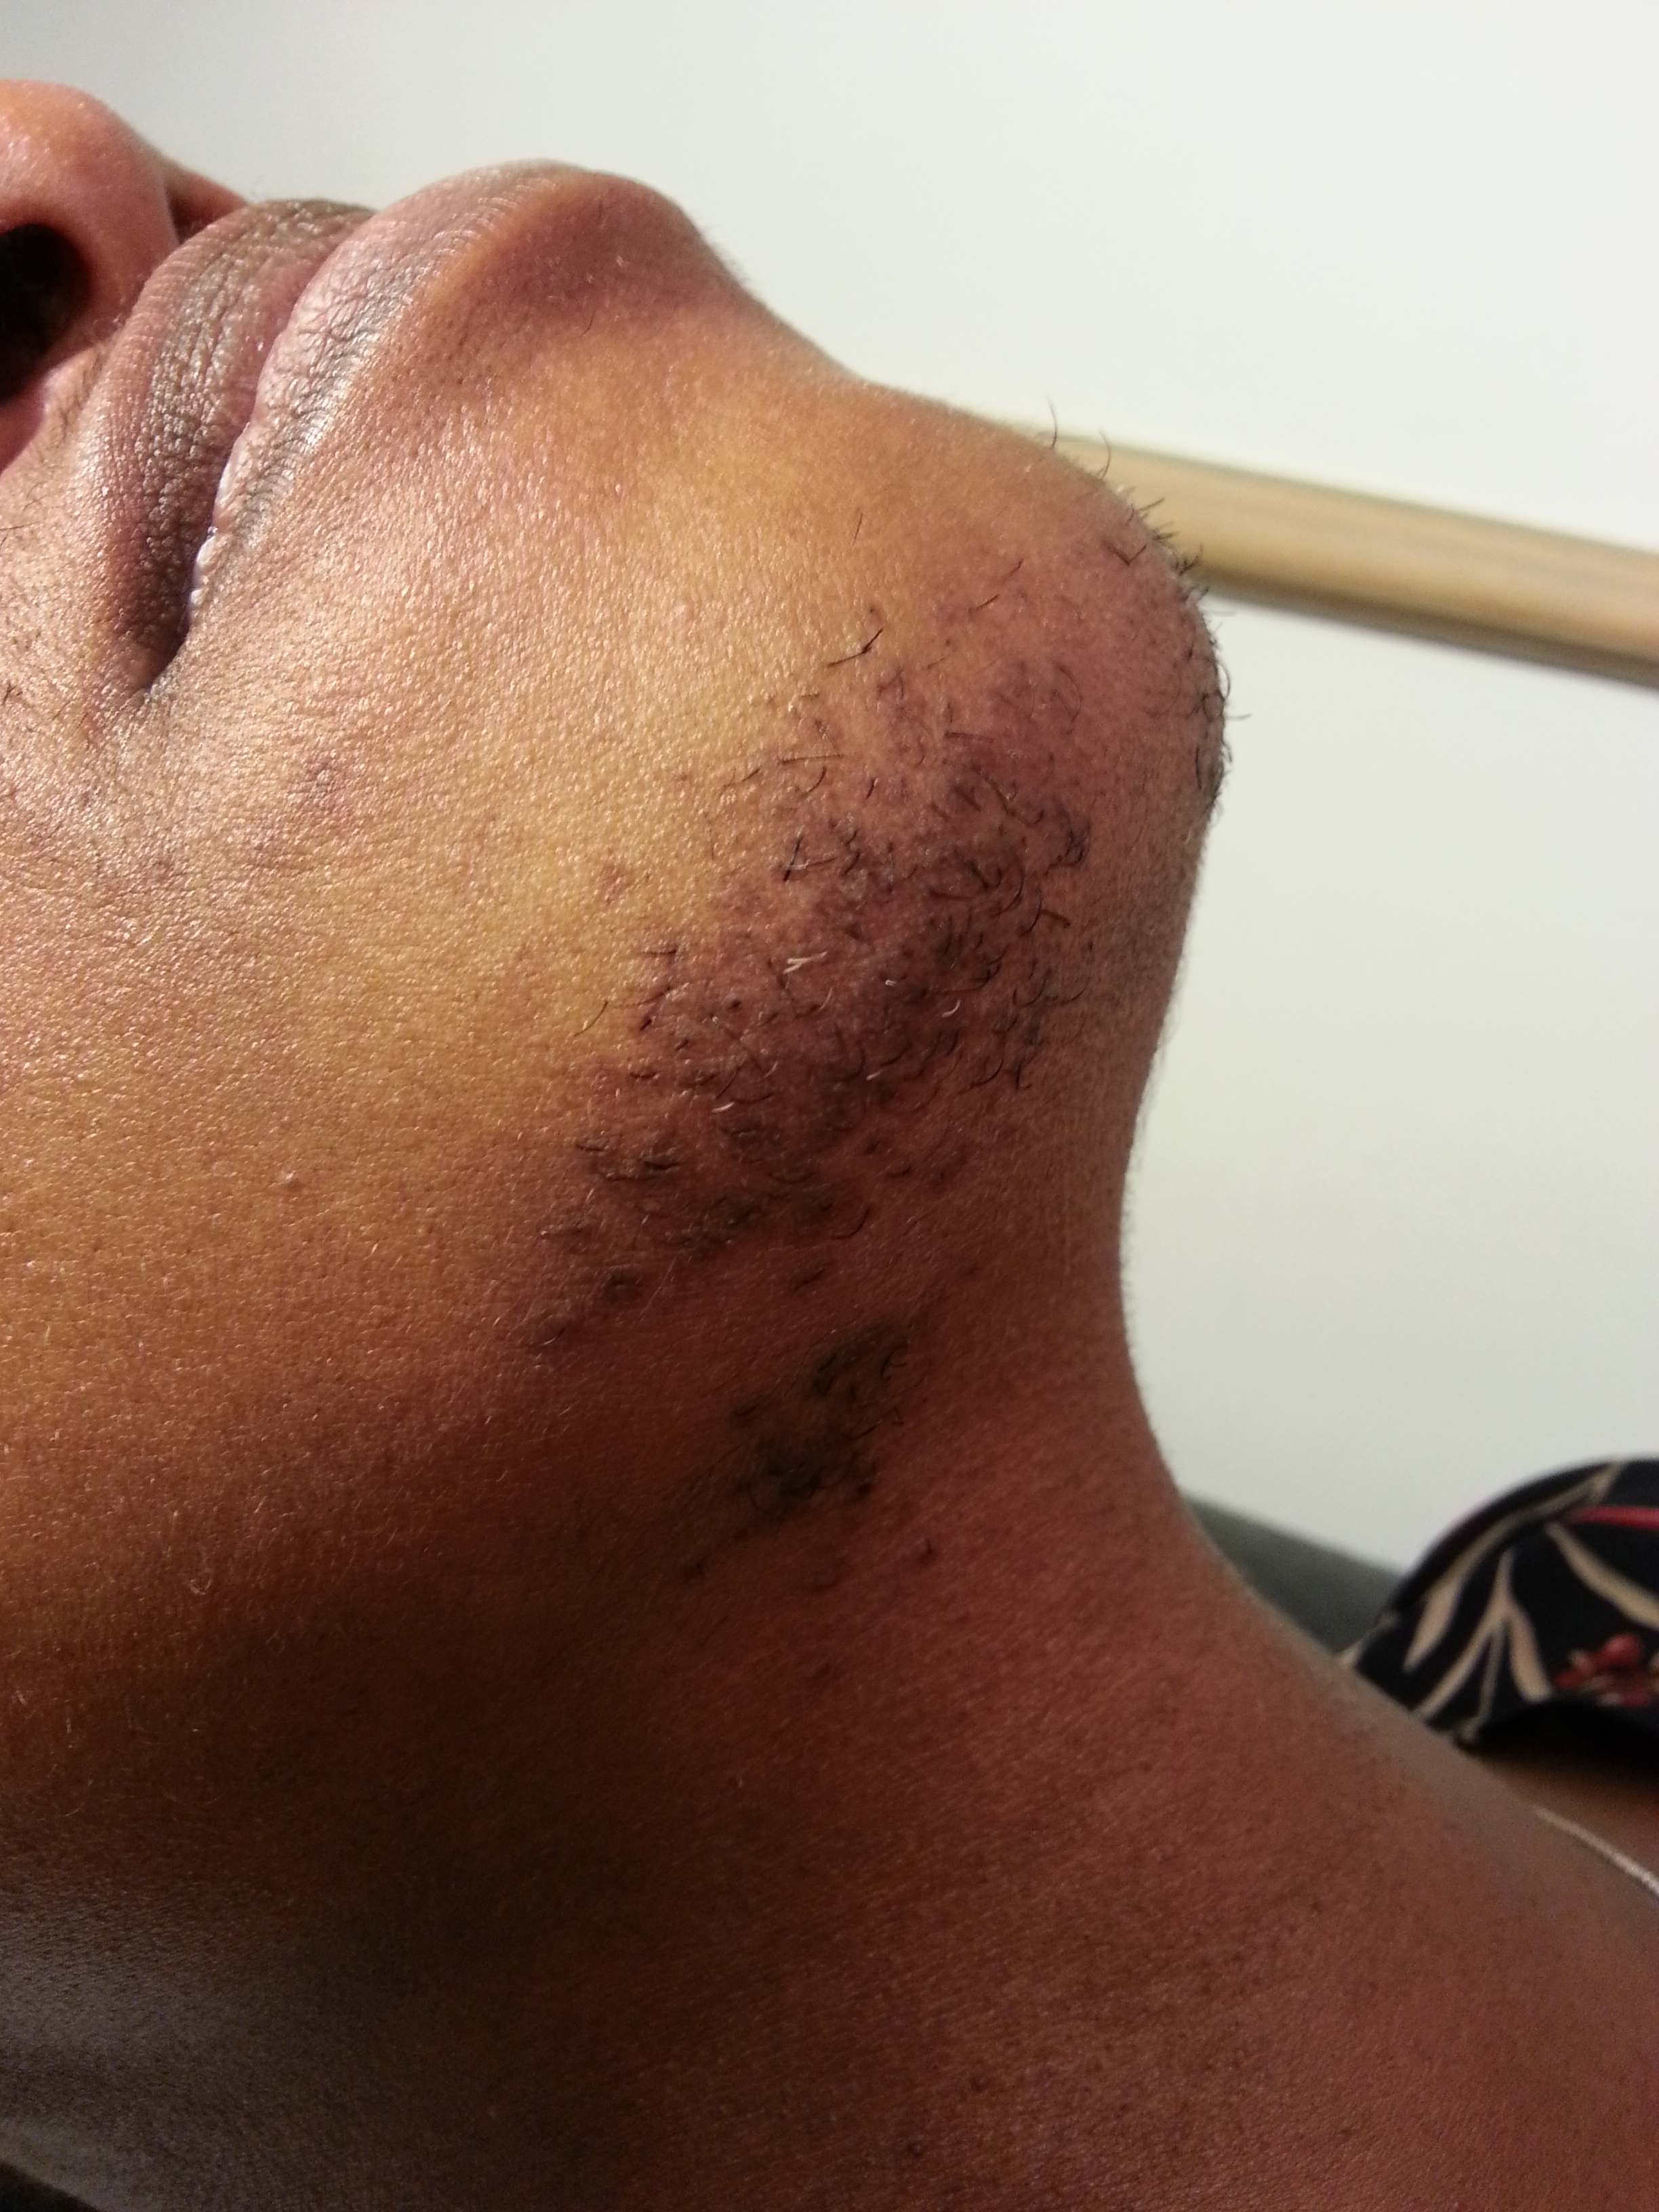 Ingrown hair damage caused by inexperienced electrologist